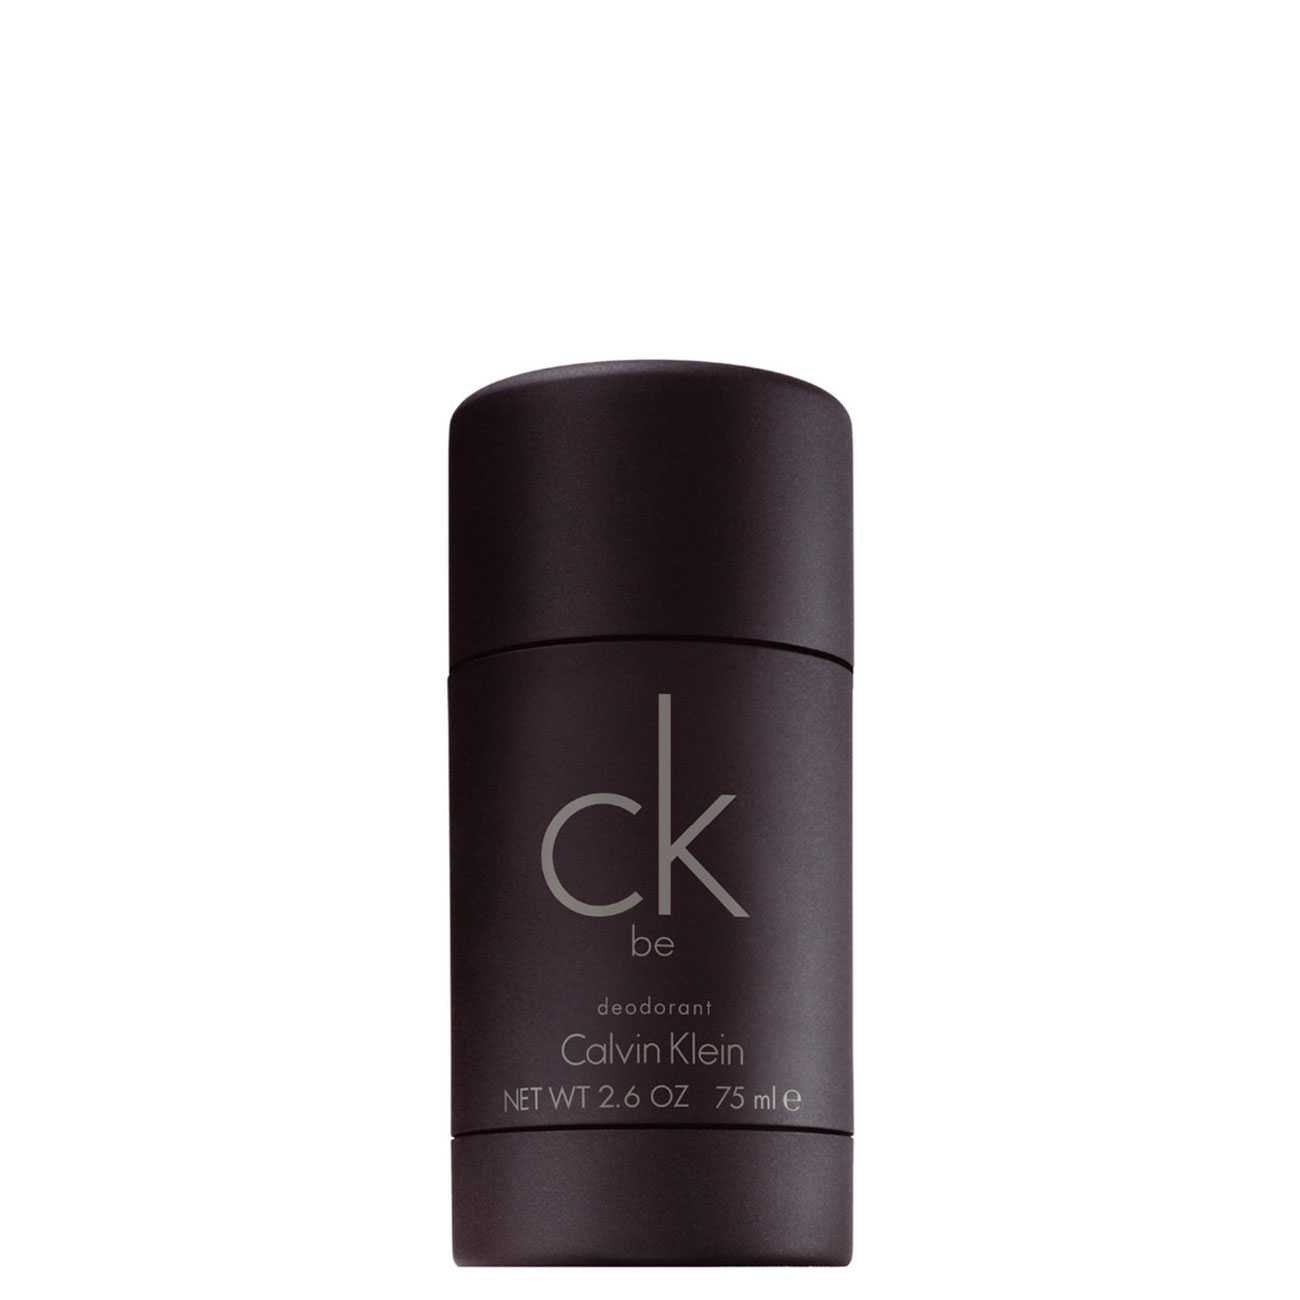 CK BE DEODORANT STICK 75 gr – Calvin Klein bestvalue.eu